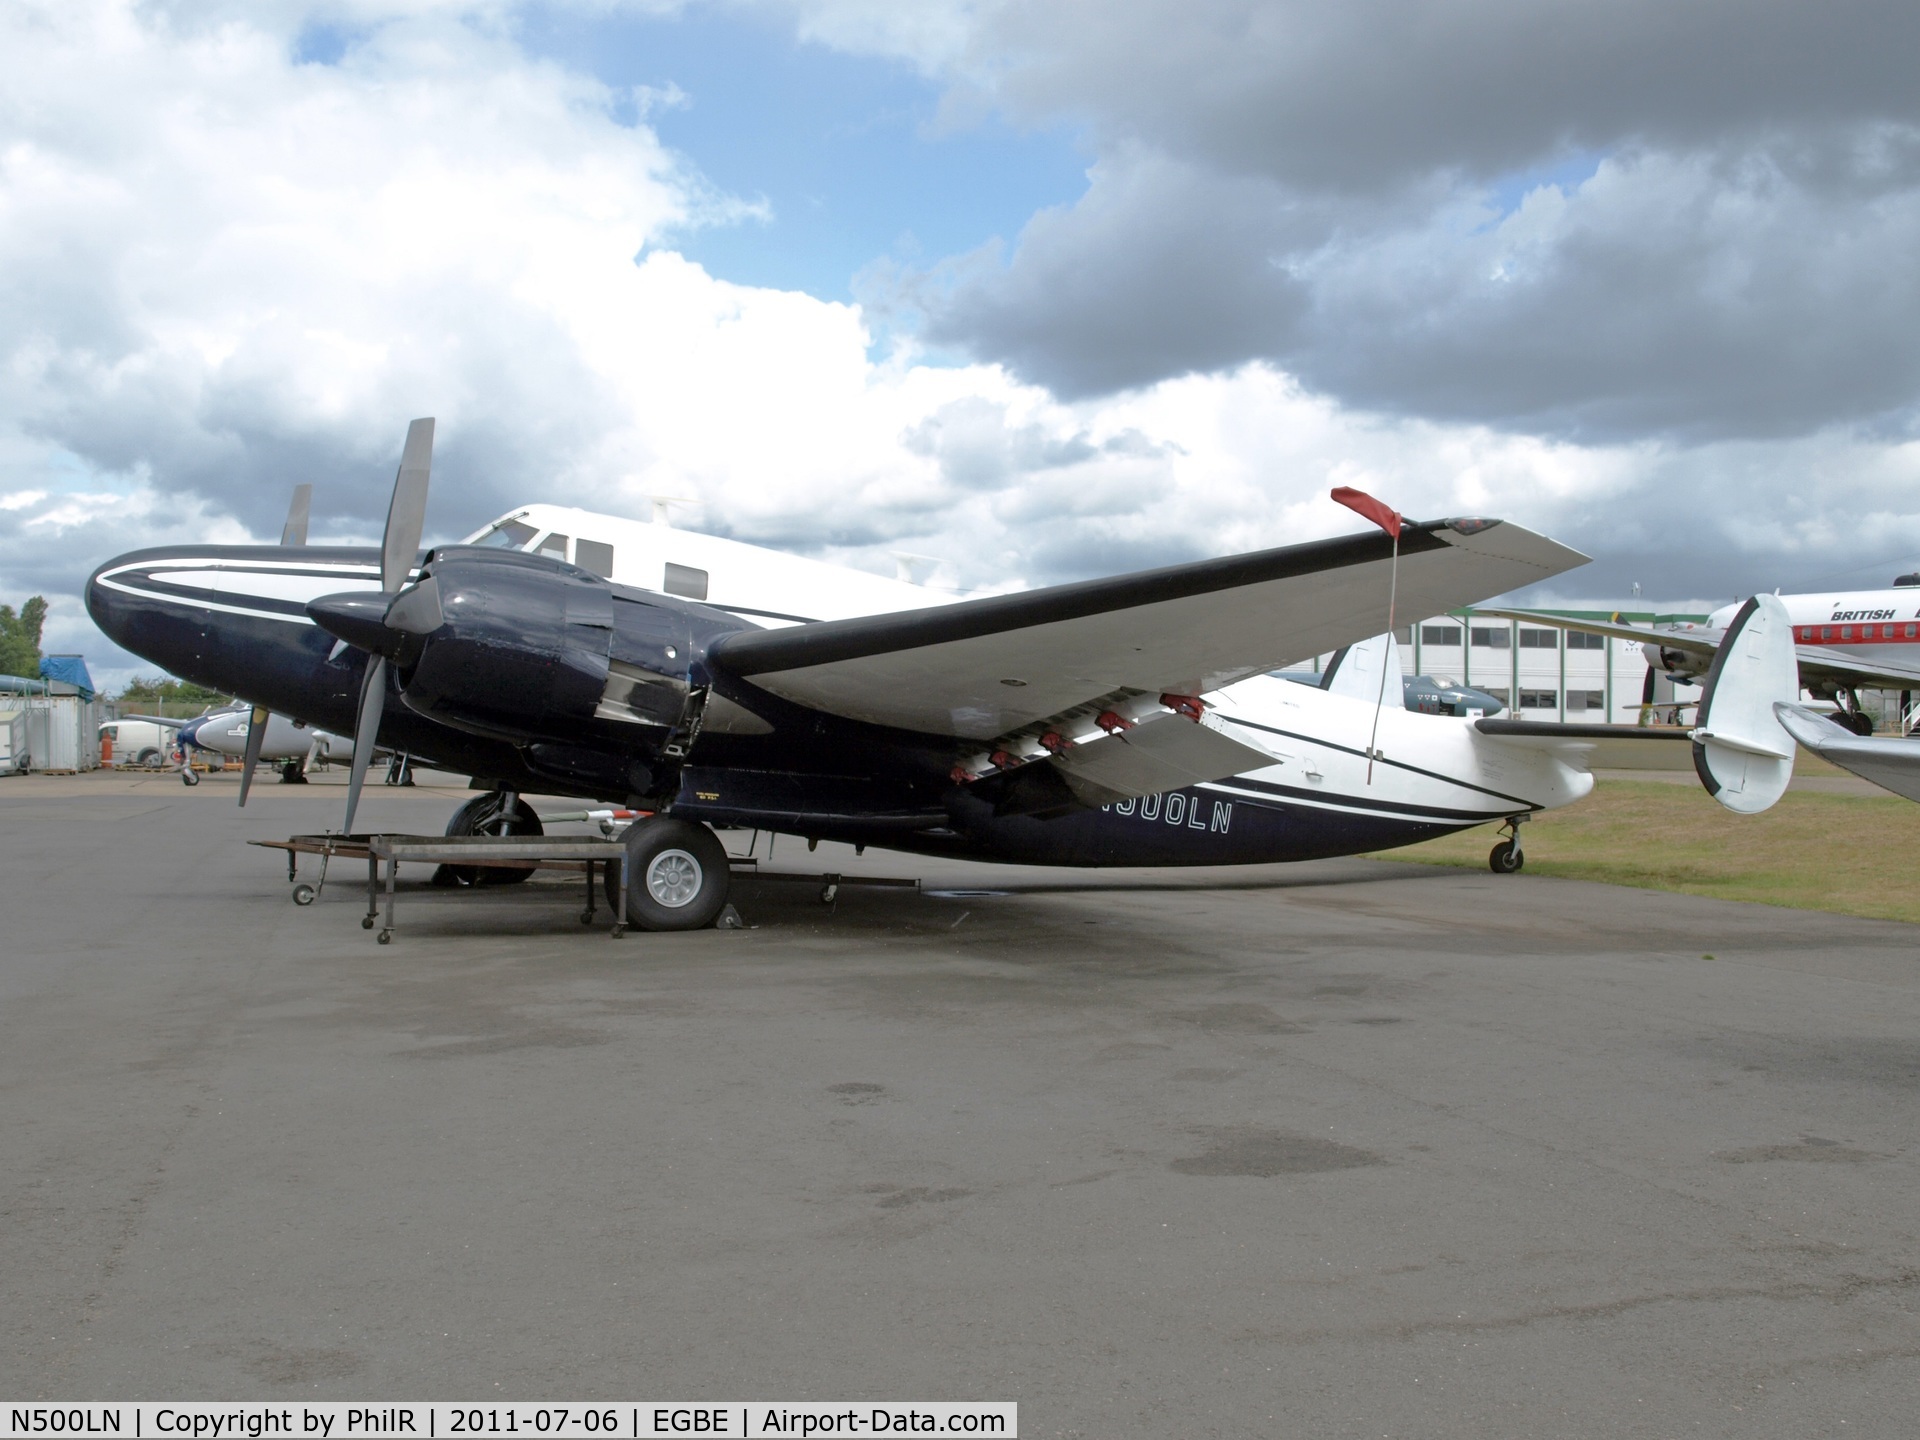 N500LN, 1960 Howard (Lockheed) 500 (PV-1/B-34 Ventura) C/N 5560/49, Seen outside of the Classic Collection hangar at Baginton